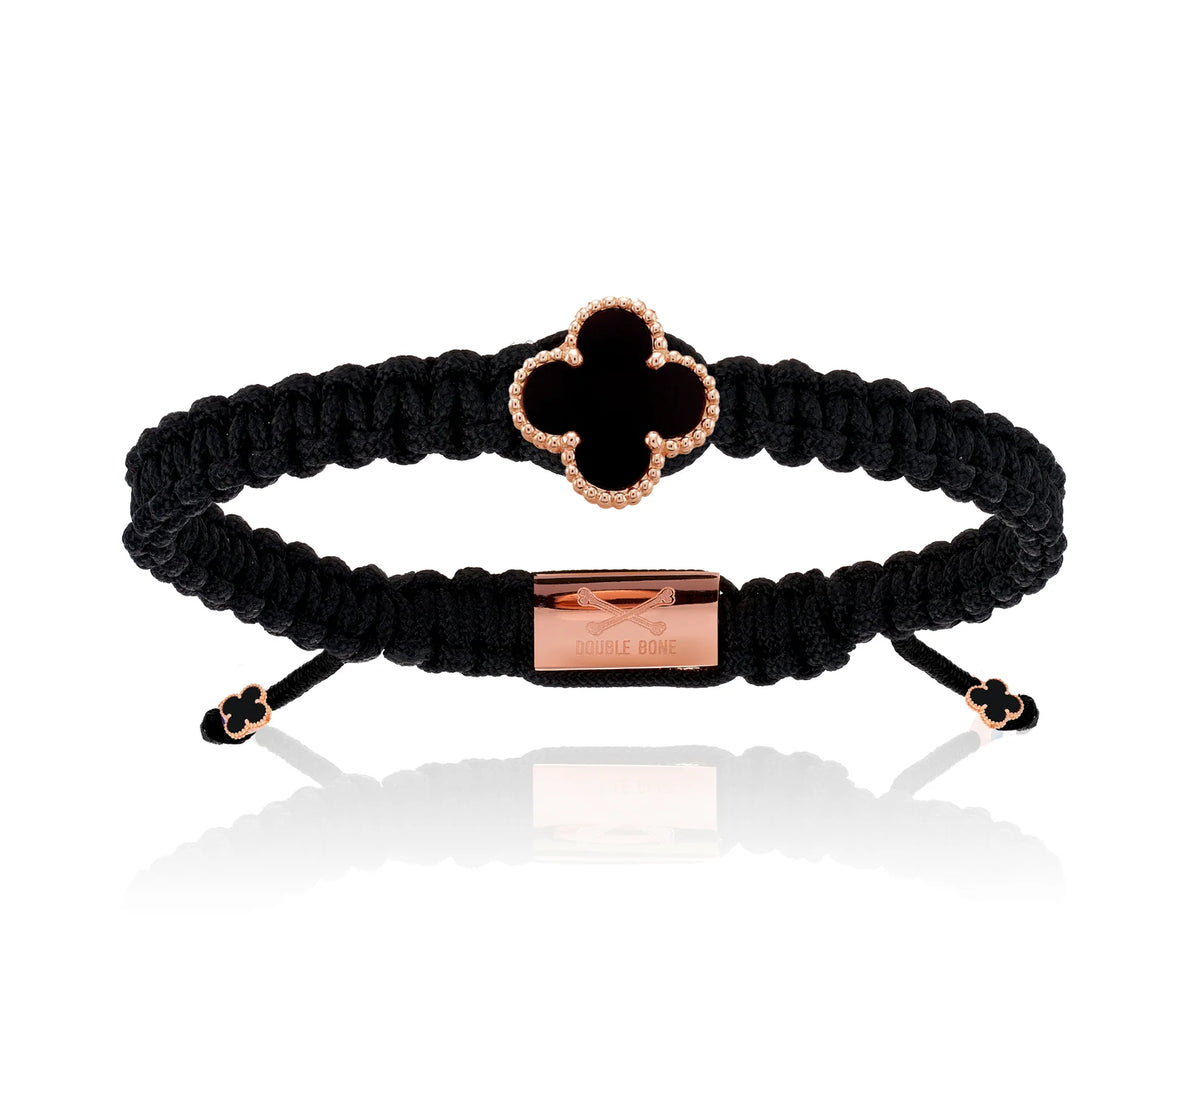 Clover Black Onyx with Rose Gold Bracelet